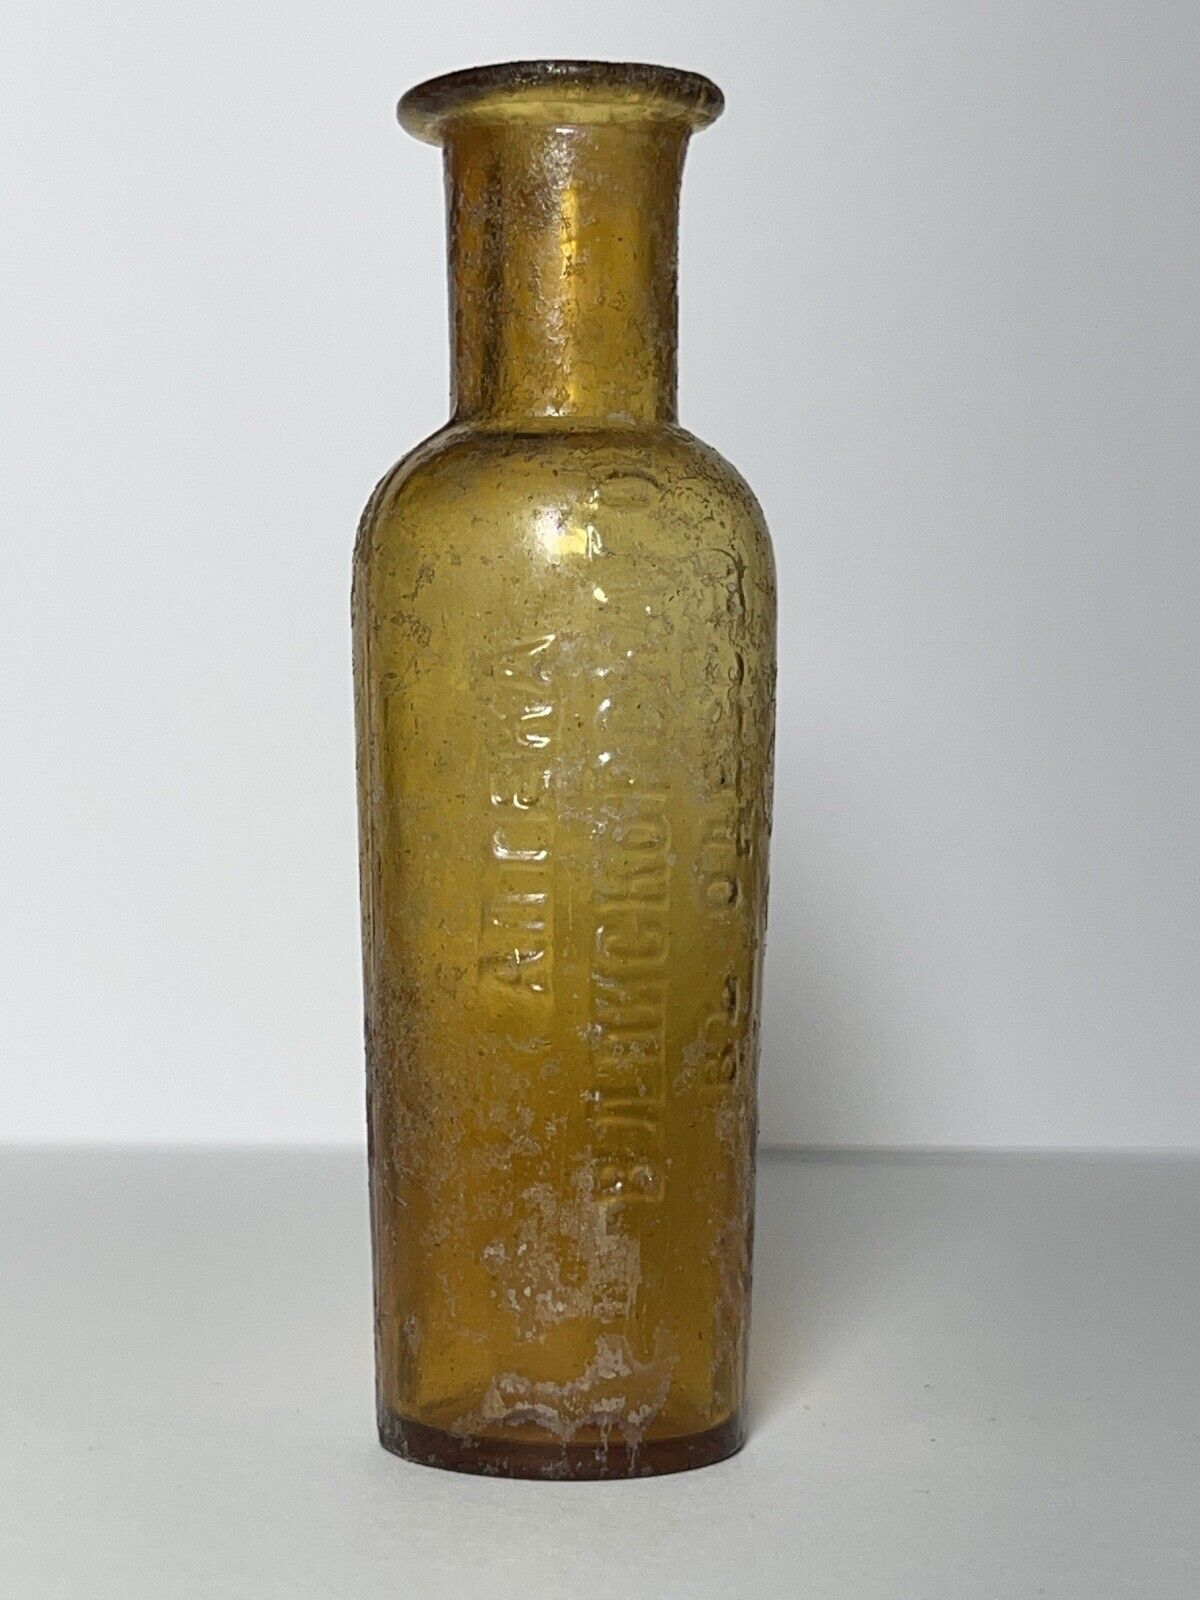 Antique 1870-90s bottle from the Czars era \